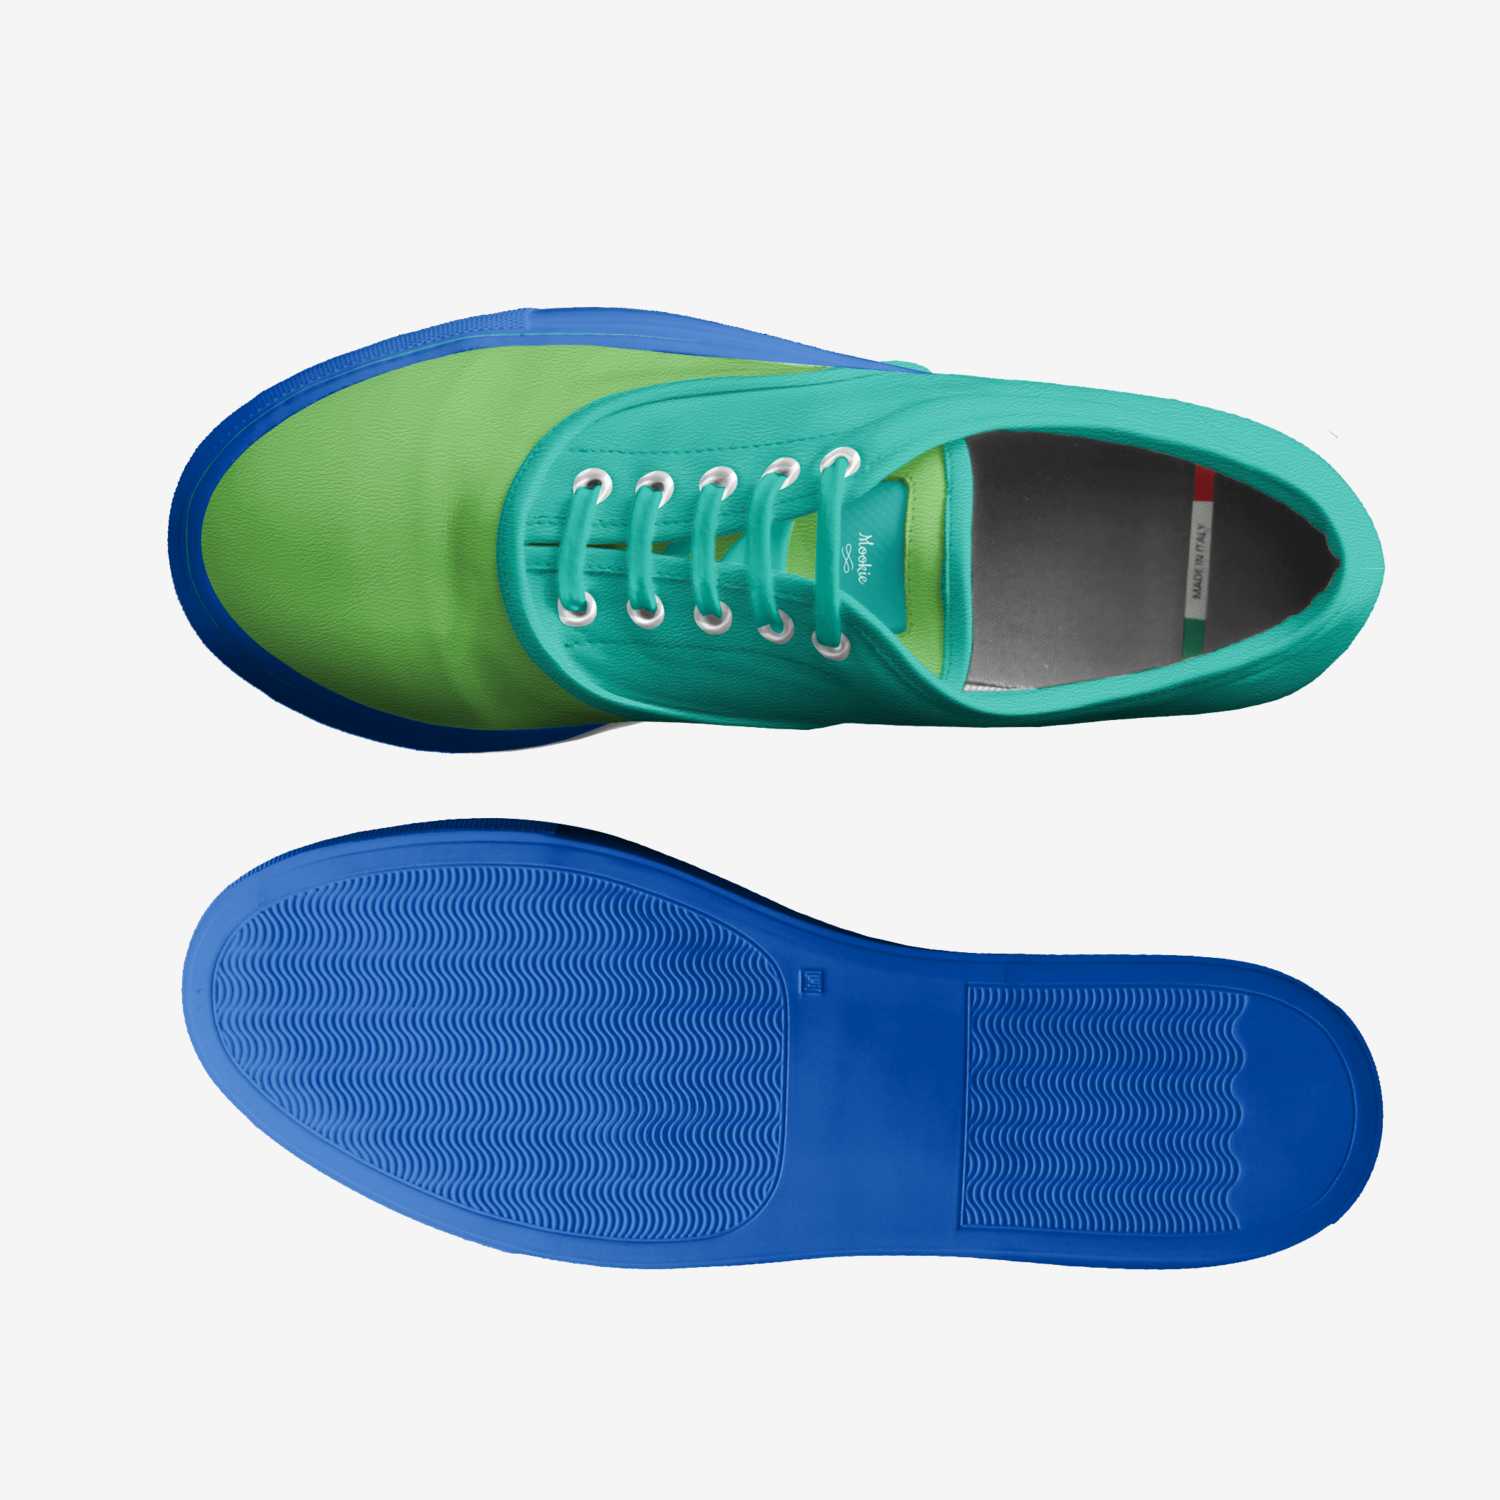 Mookie | A Custom Shoe concept by Schenck